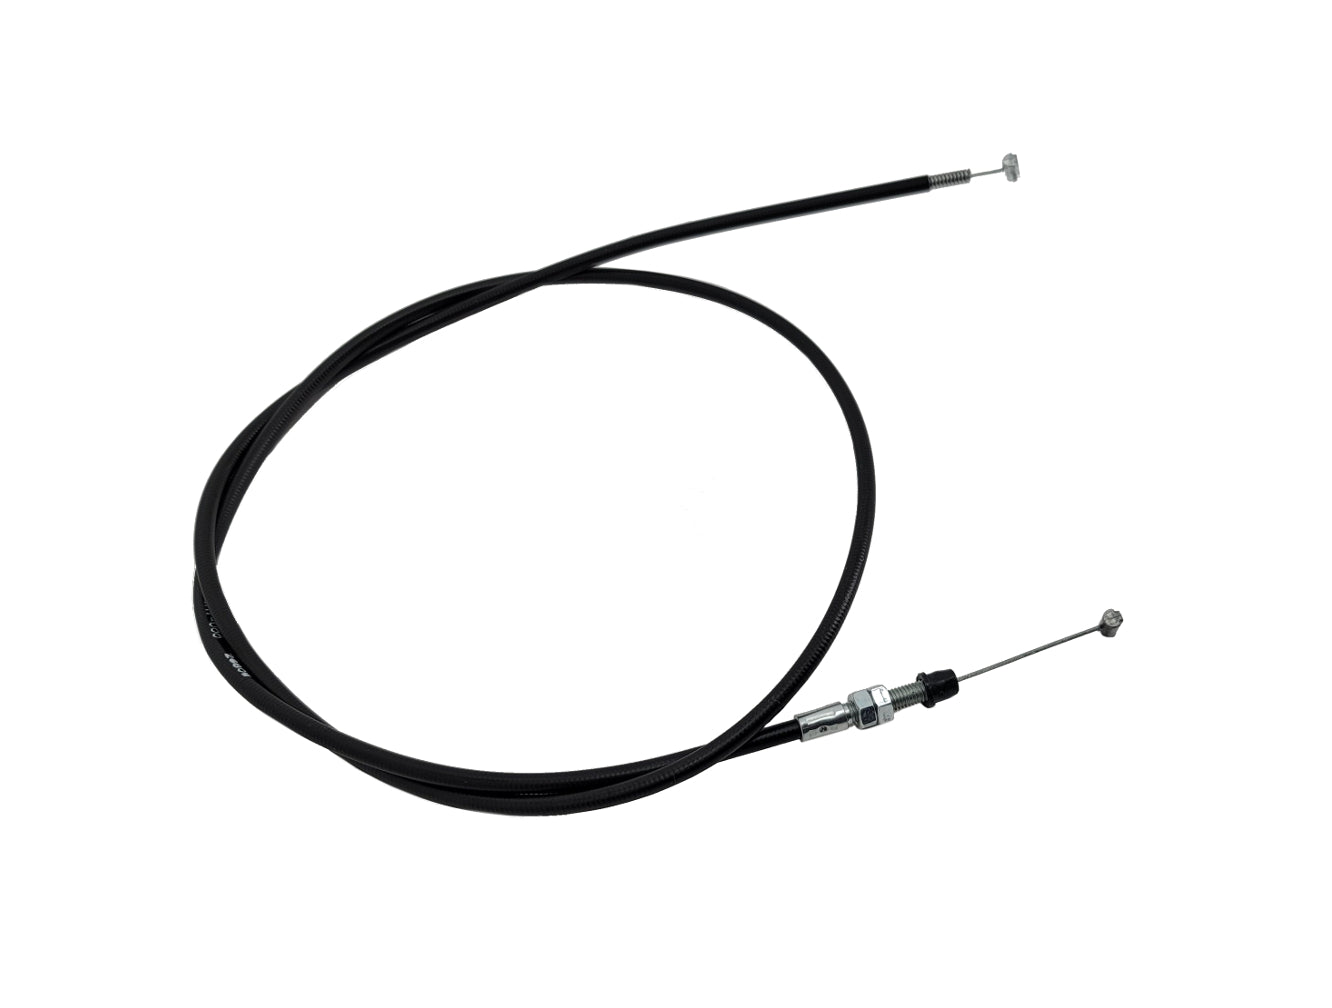 Honda Throttle Cable For HRX217 Series - 17910-VH7-000